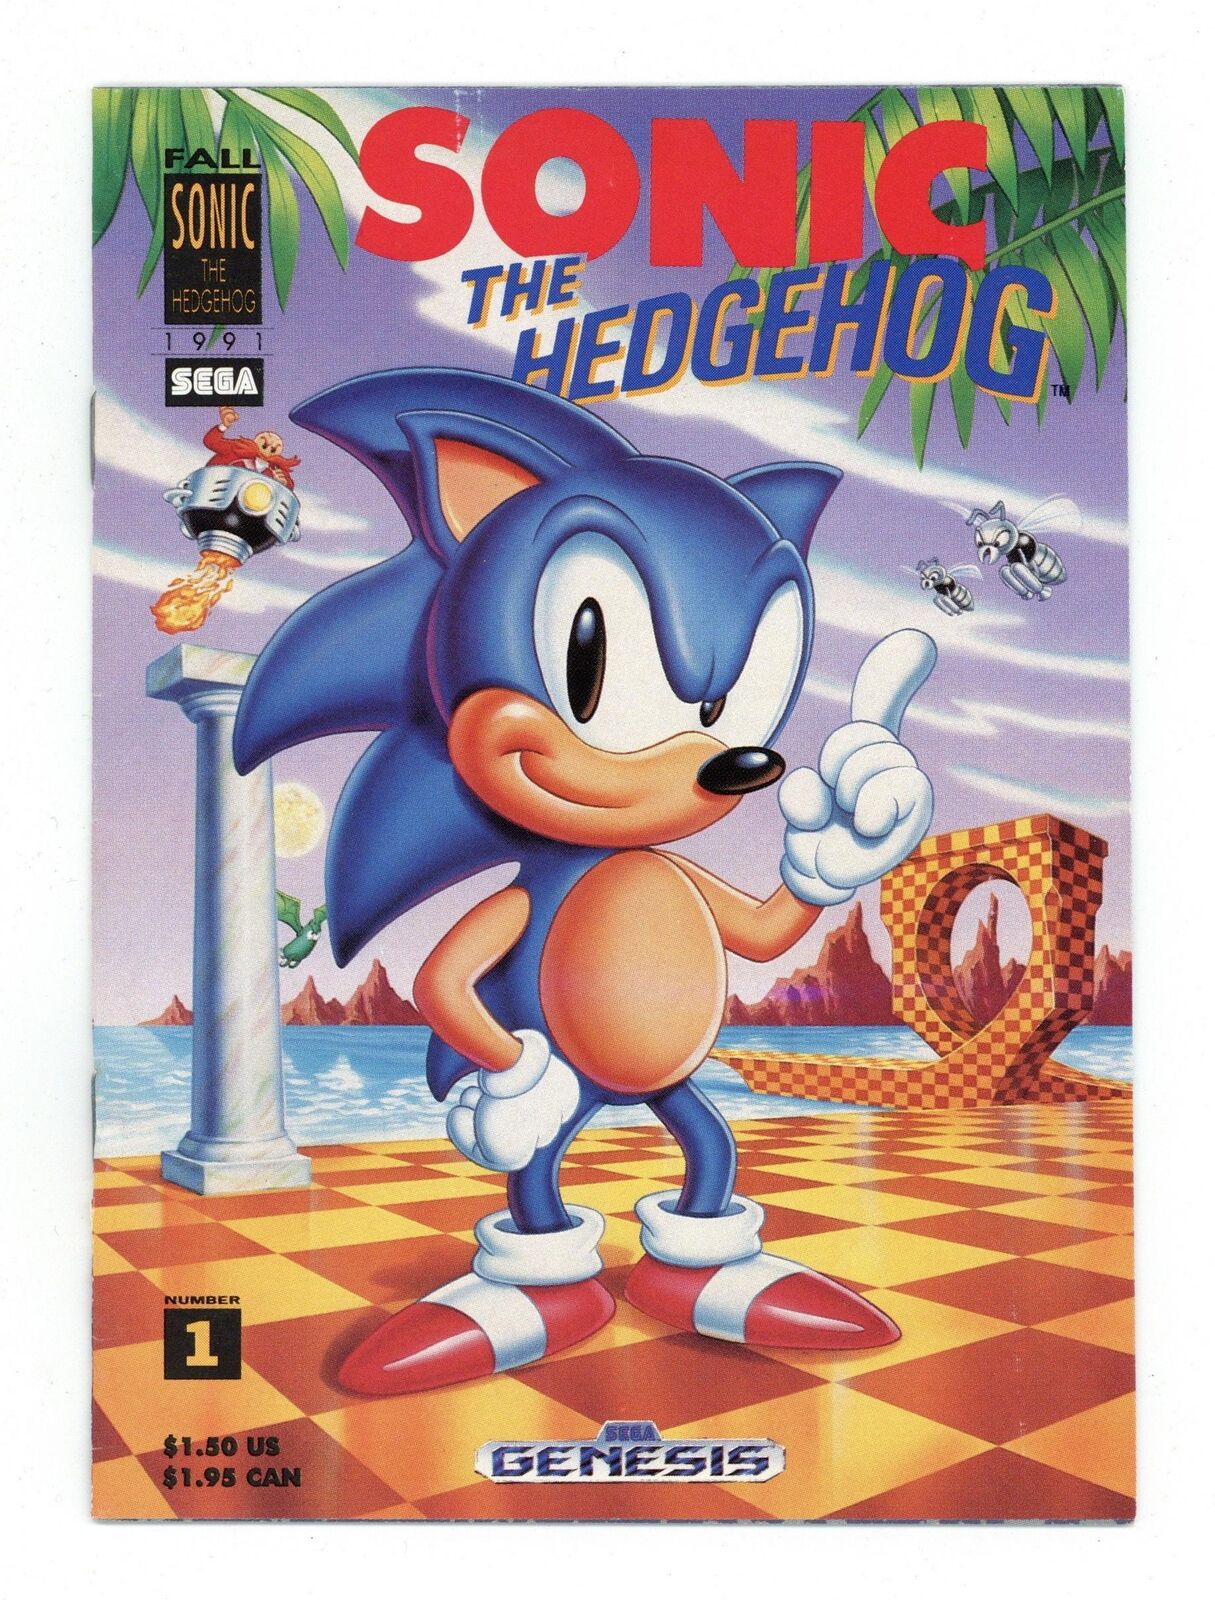 Sonic the Hedgehog #1 Mini Variant FN 6.0 1991